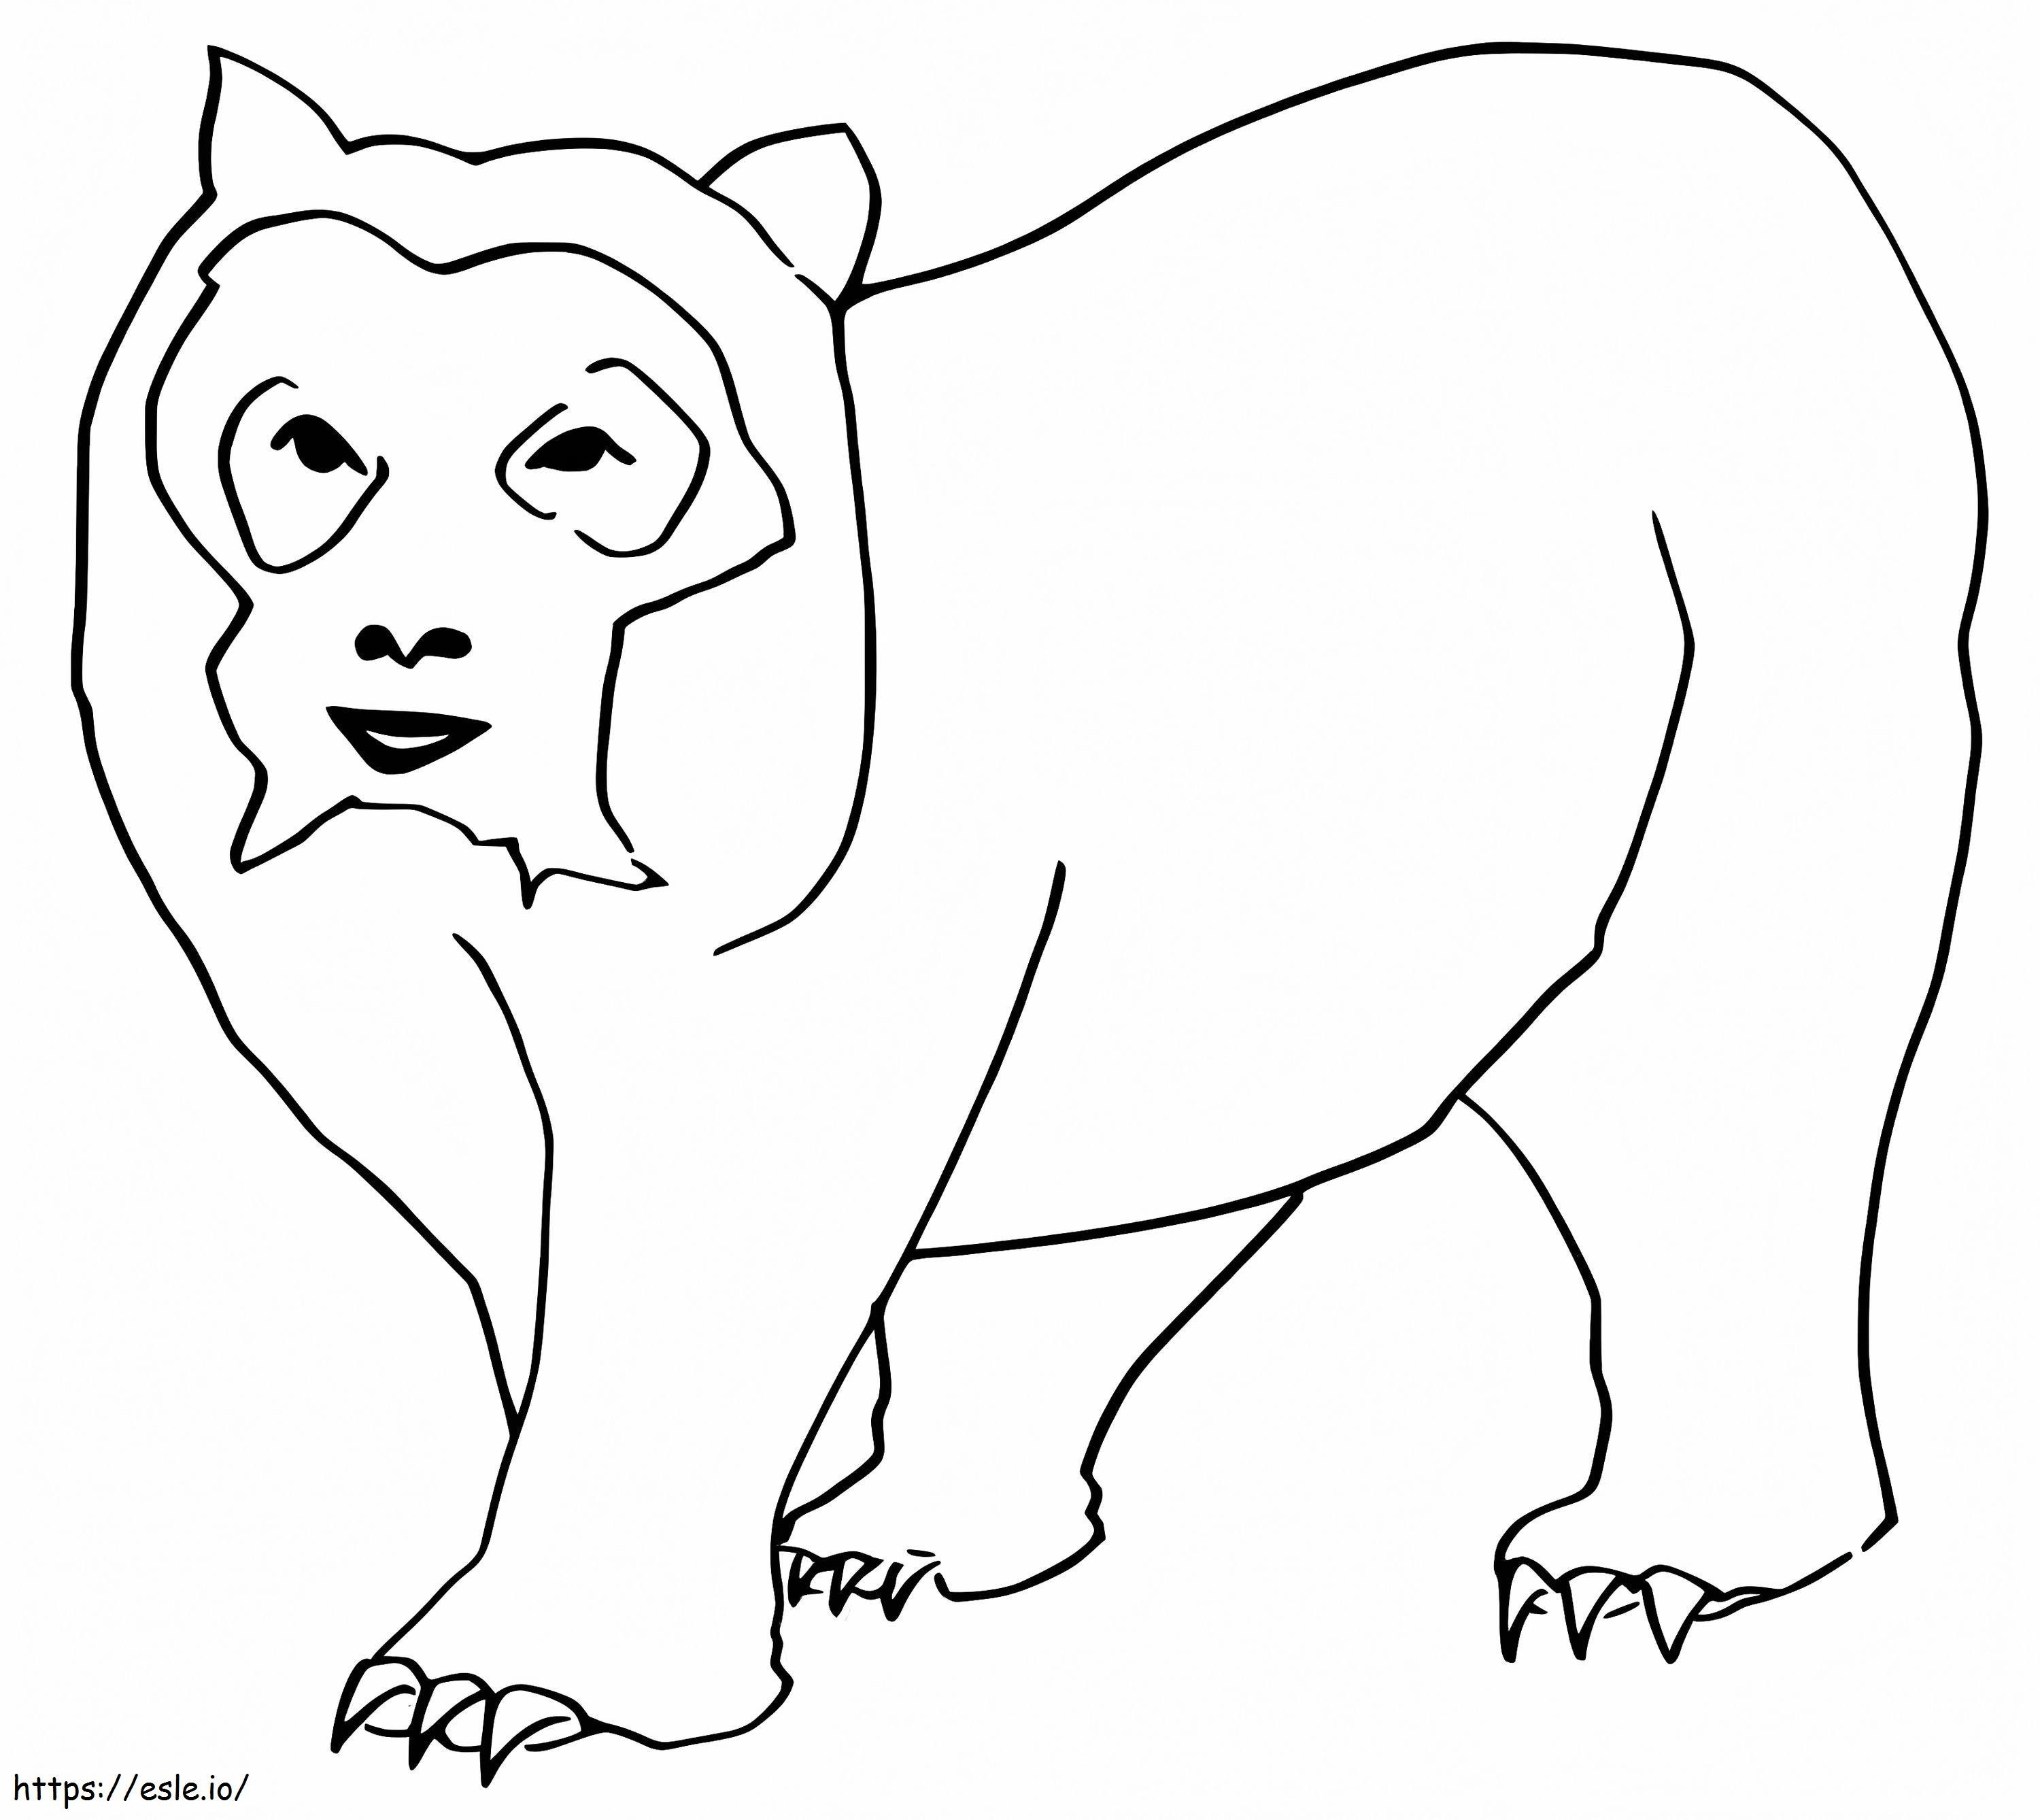 Walking Bear coloring page